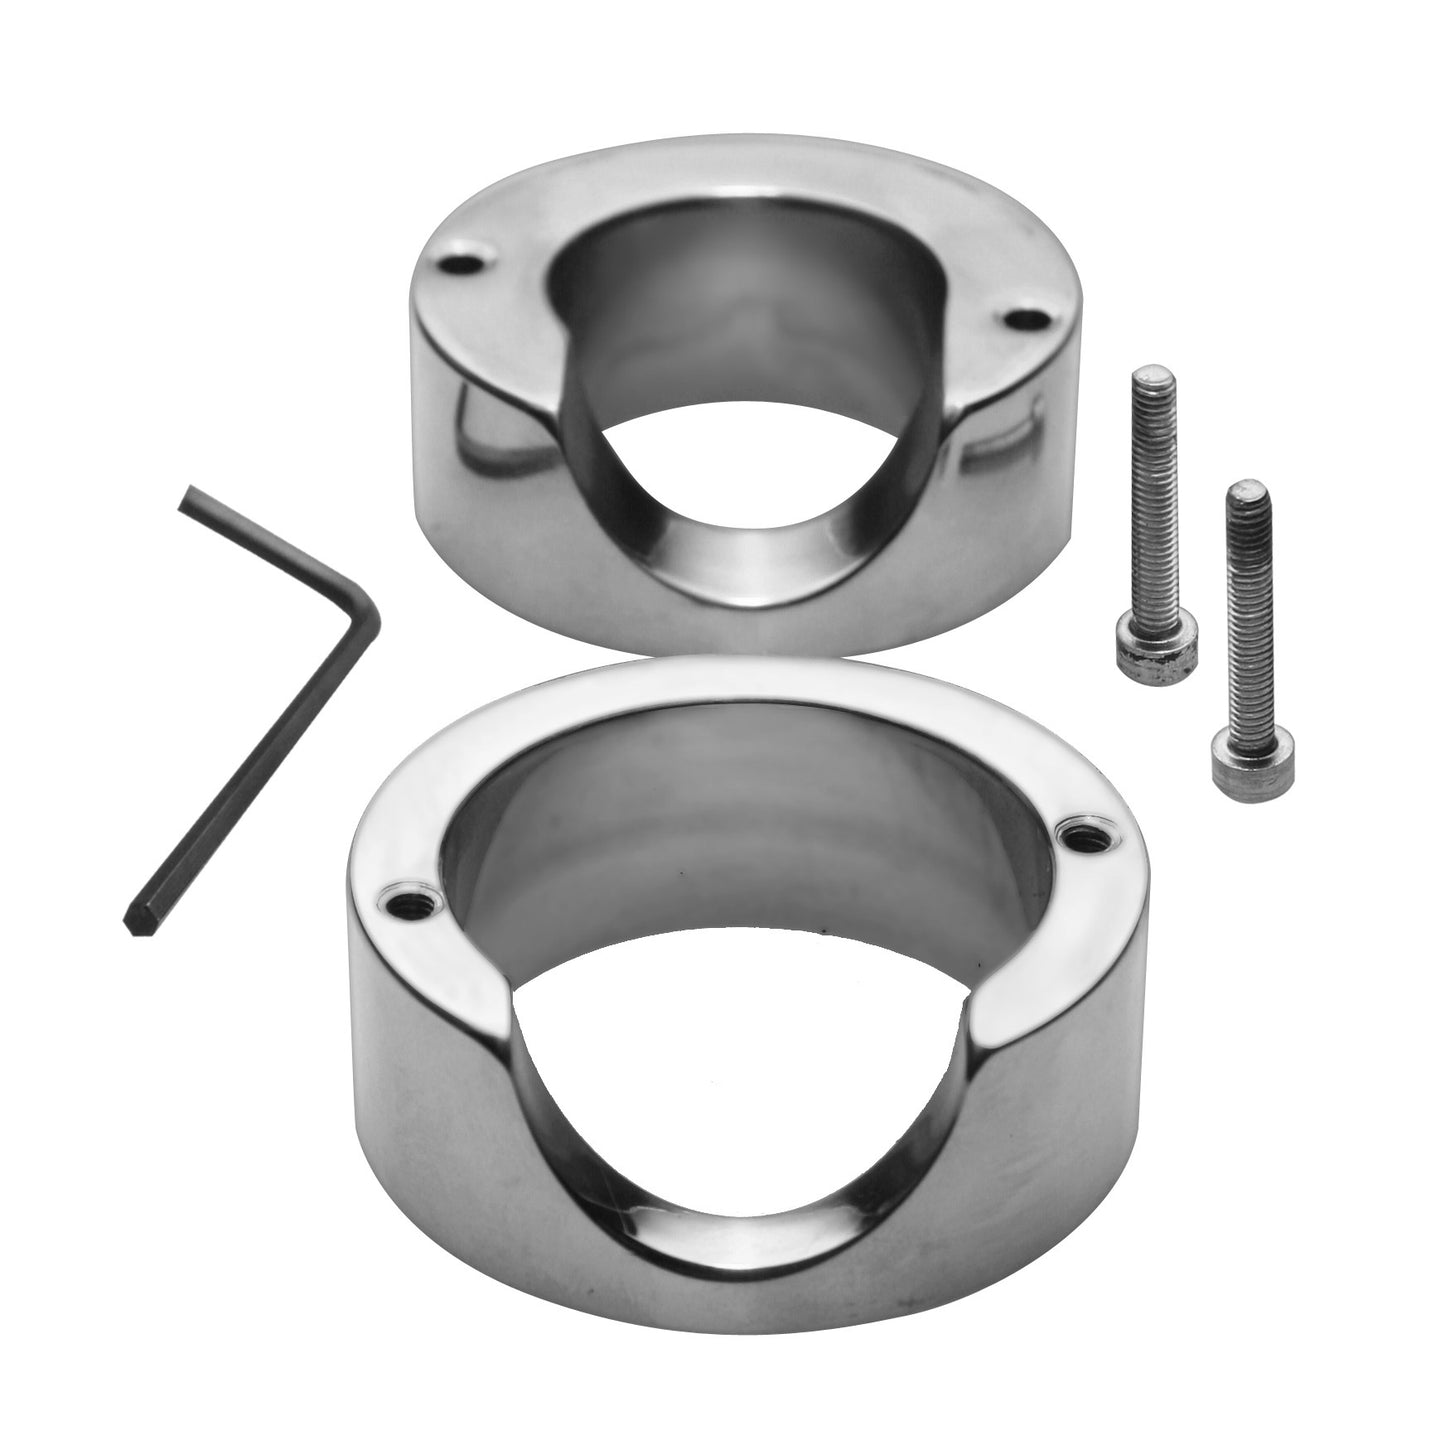 Stainless Steel Penis Trap - UABDSM